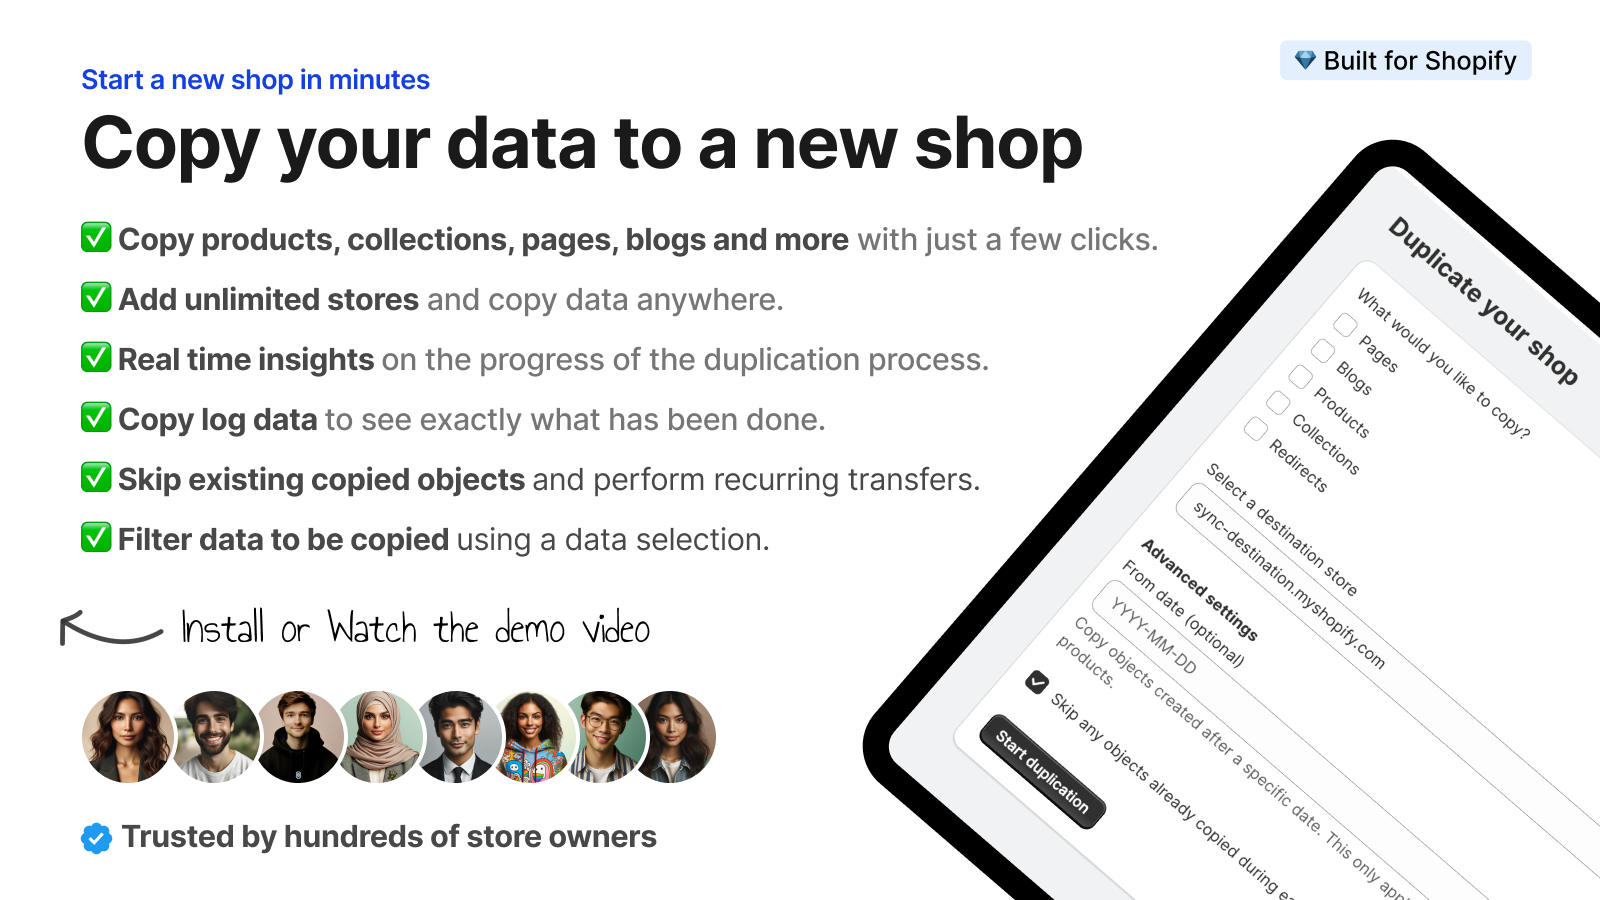 Kopier dine data til en ny butik